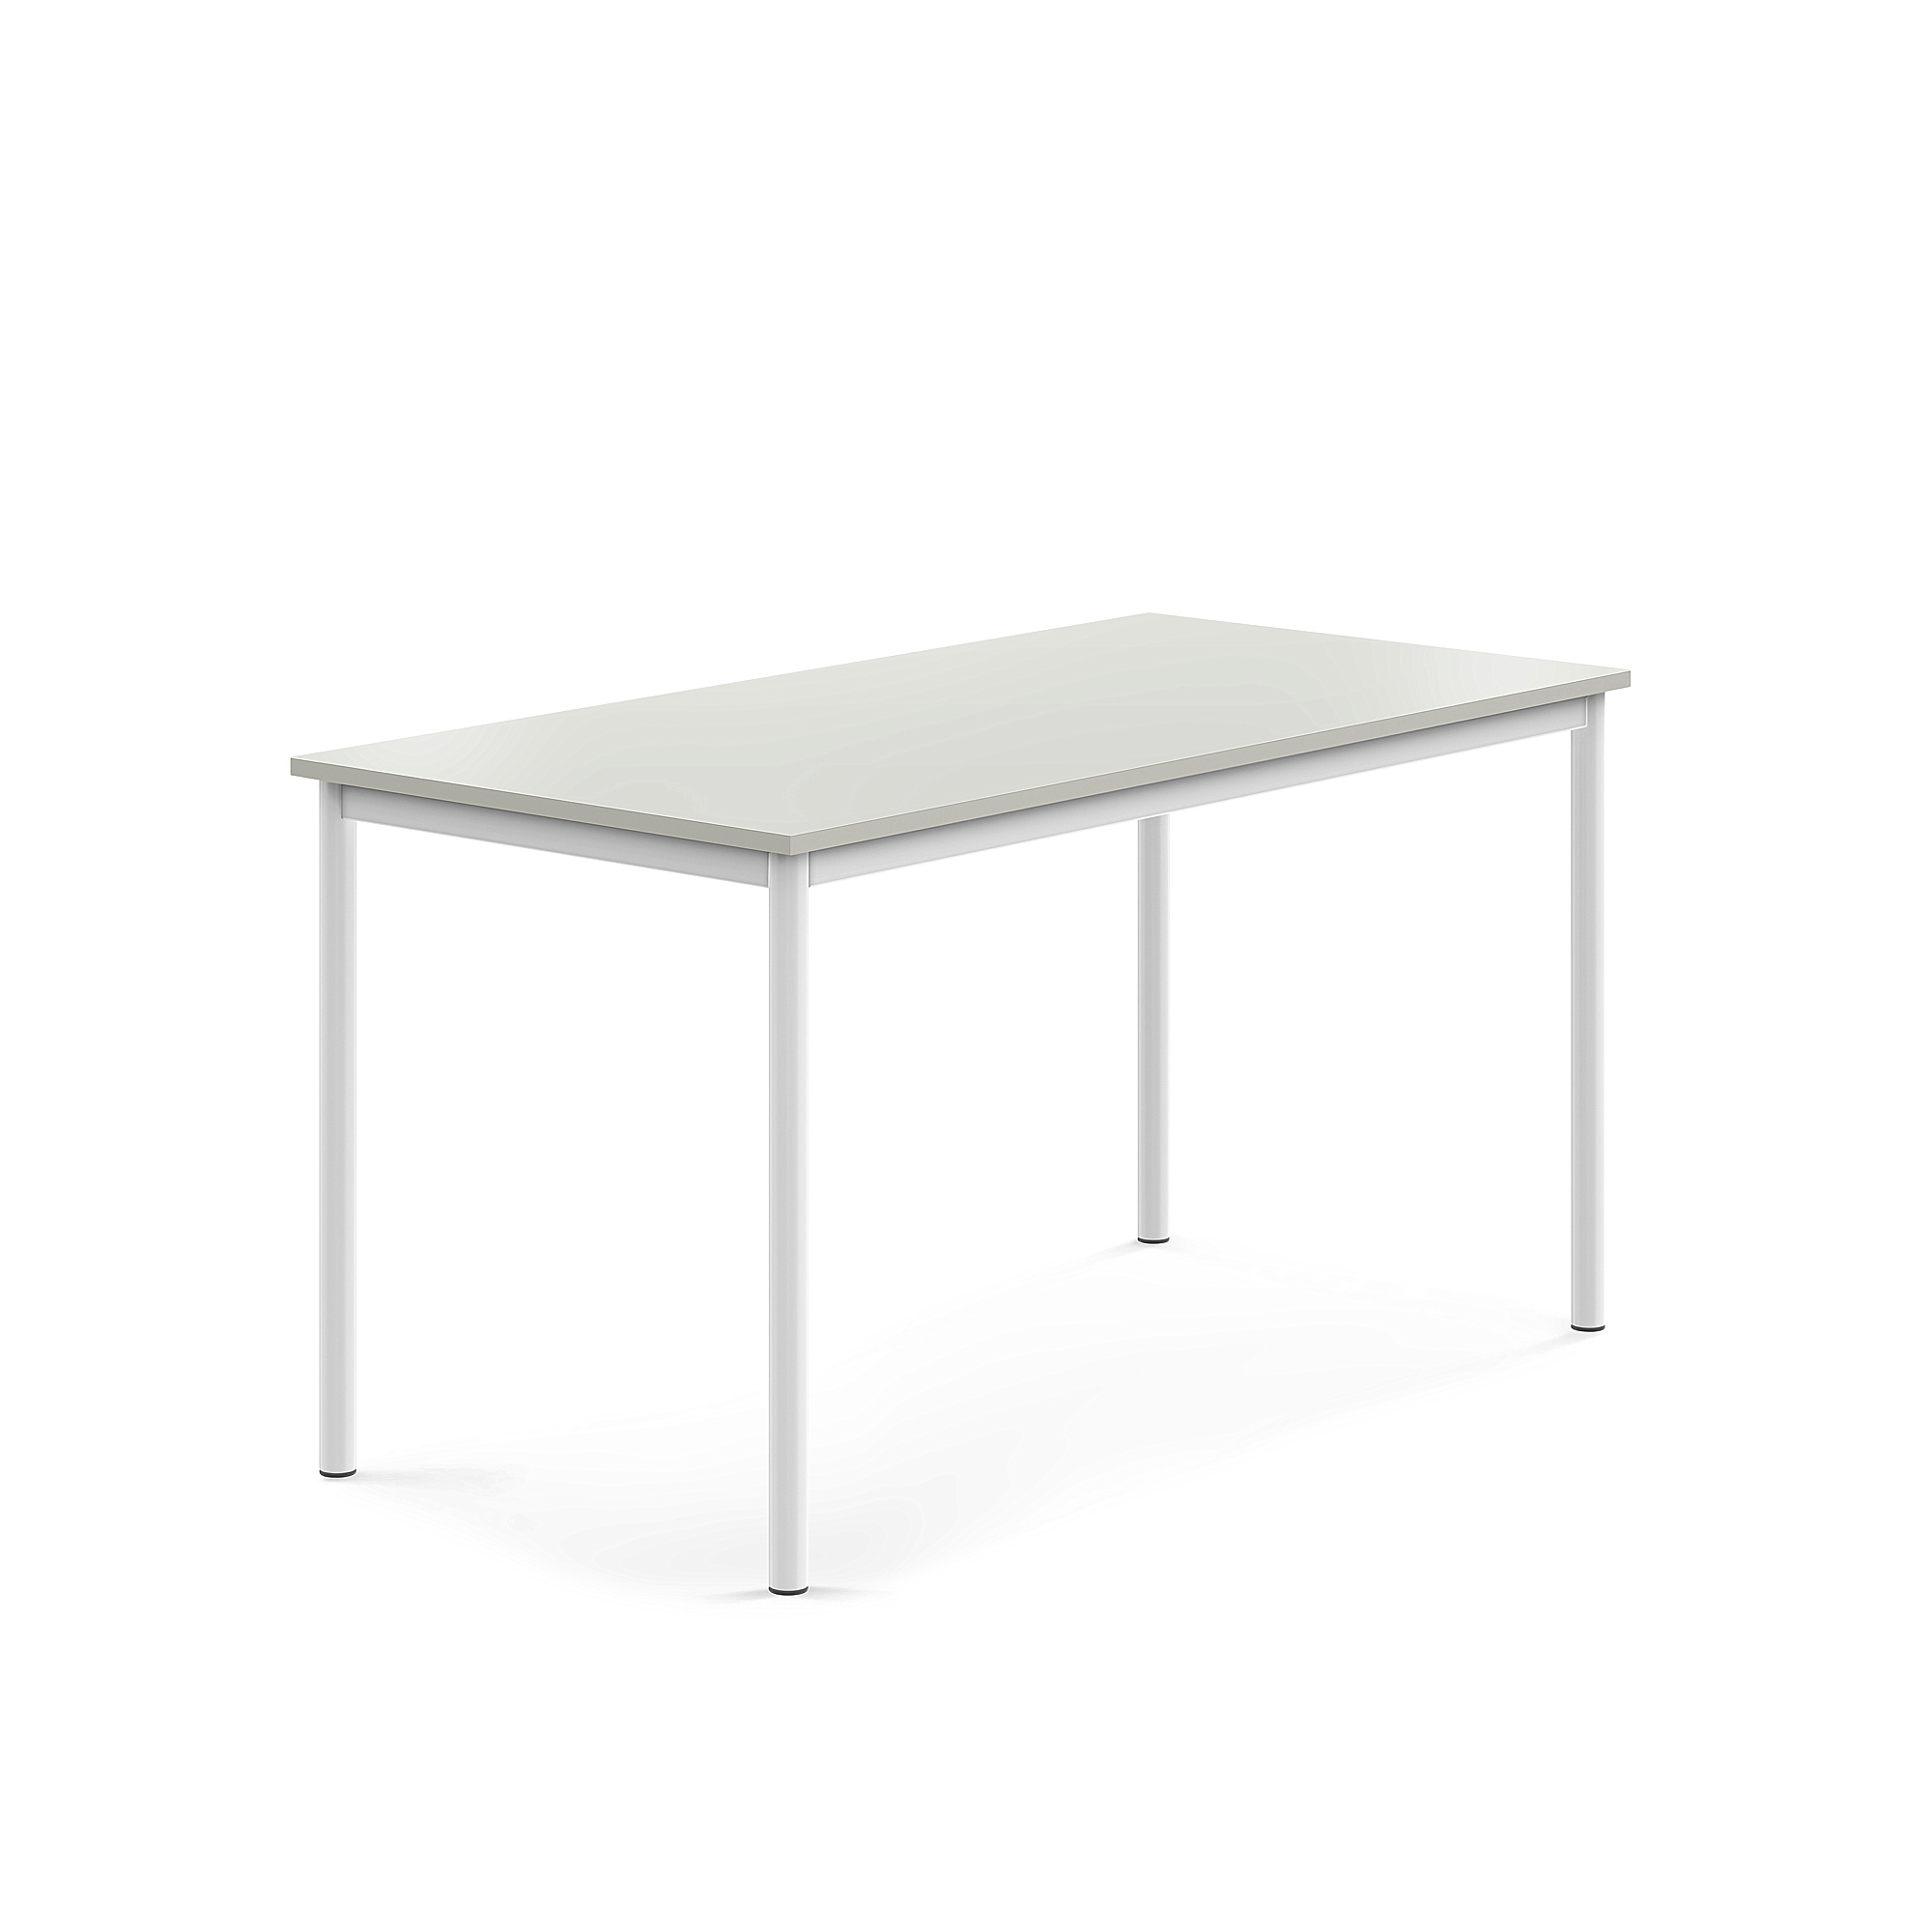 Stůl SONITUS, 1400x700x720 mm, bílé nohy, HPL deska tlumící hluk, šedá